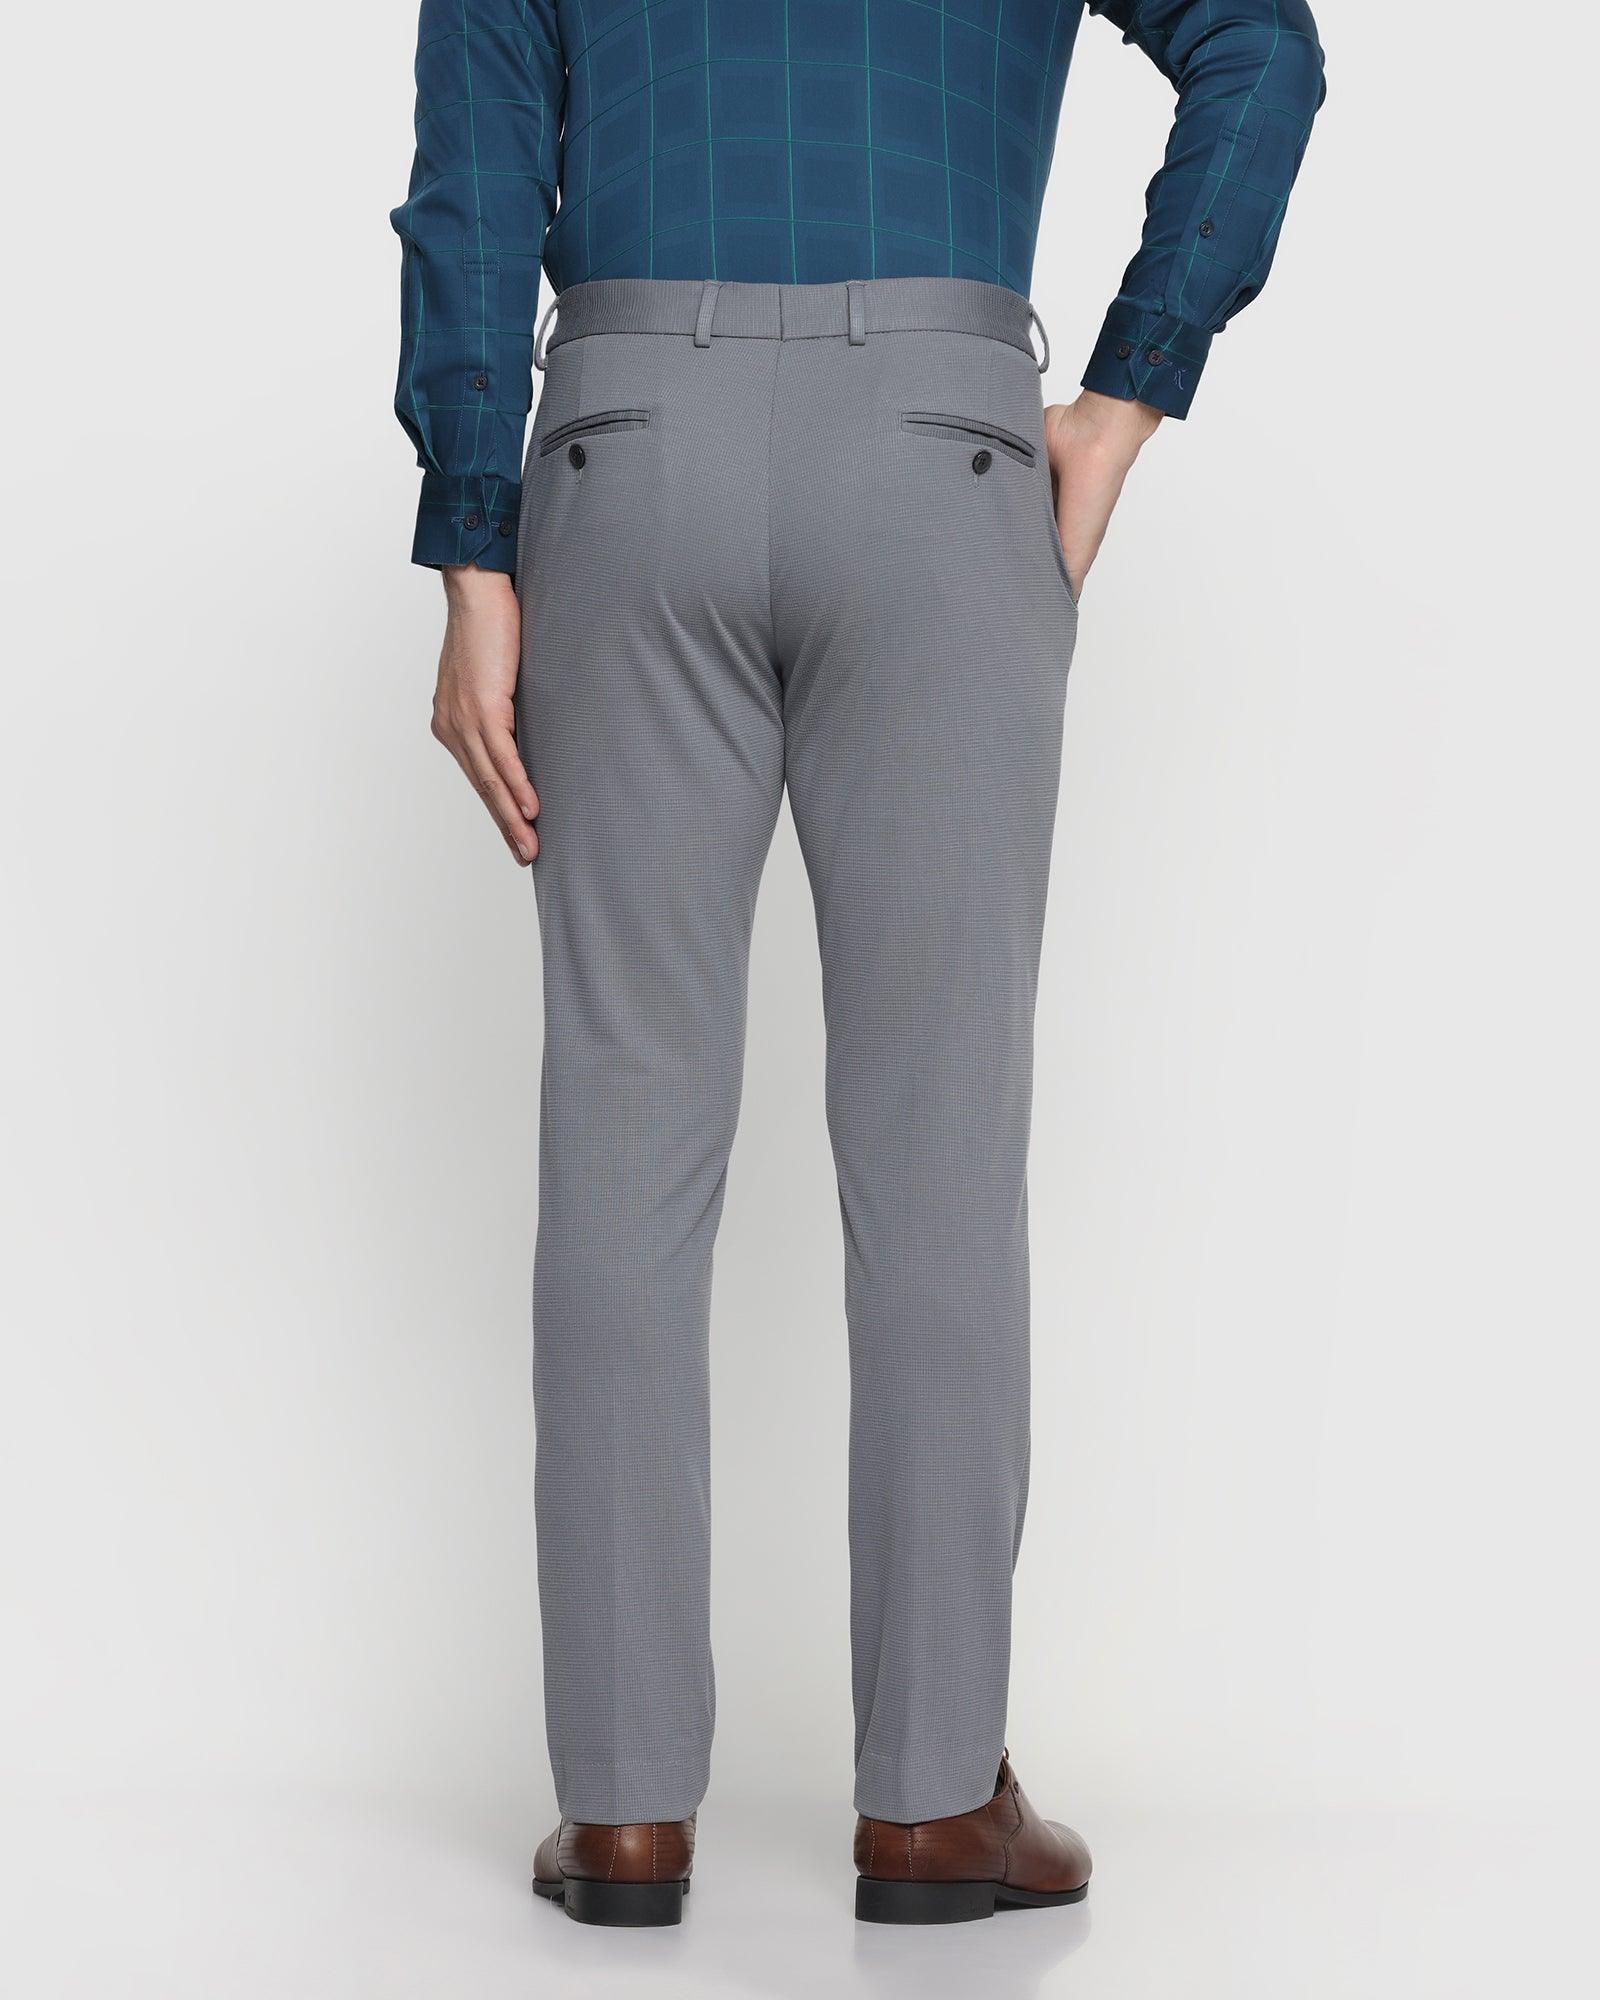 Slim Fit B-91 Formal Grey Textured Trouser - Lenor